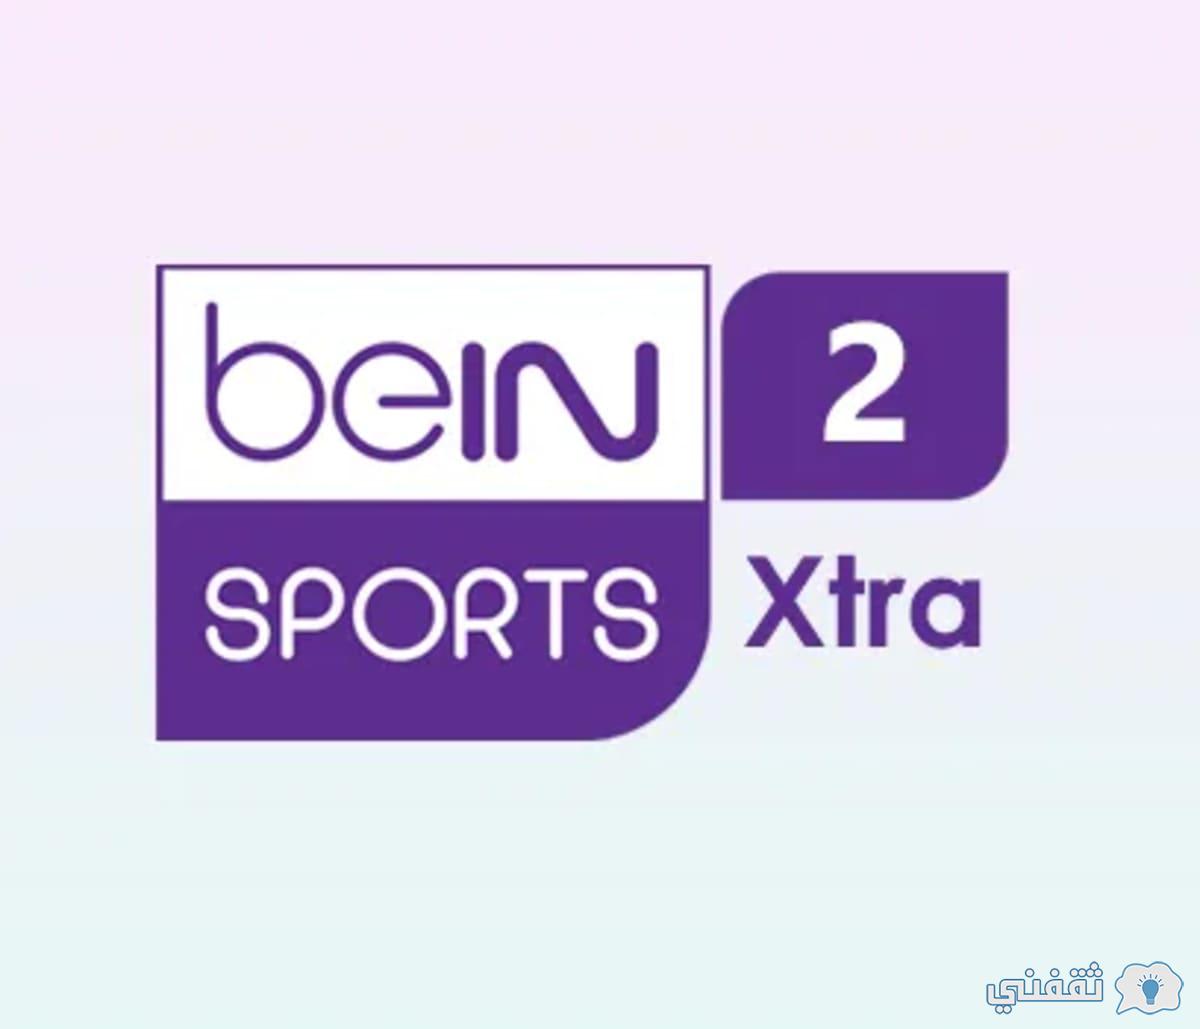 Bein sports live stream. Логотип Телеканал Bein Sports. Bein Sports Max 2.